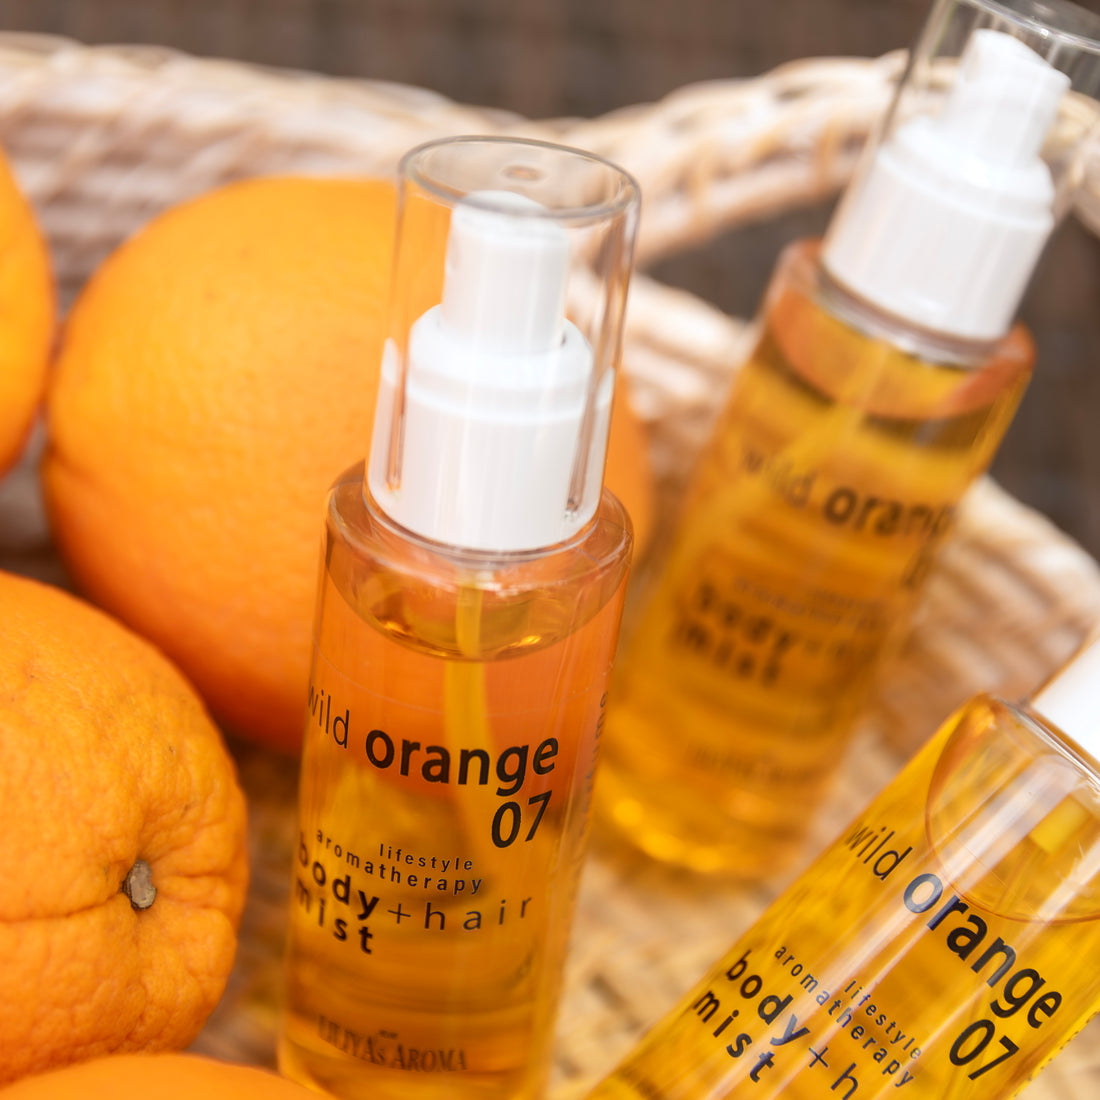 Wild Orange 07 Body Fragrance, Brazilian Orange, Neroli Essential Oils &amp; Vanilla, Tropical Gourmand Scent 4 Fl Oz